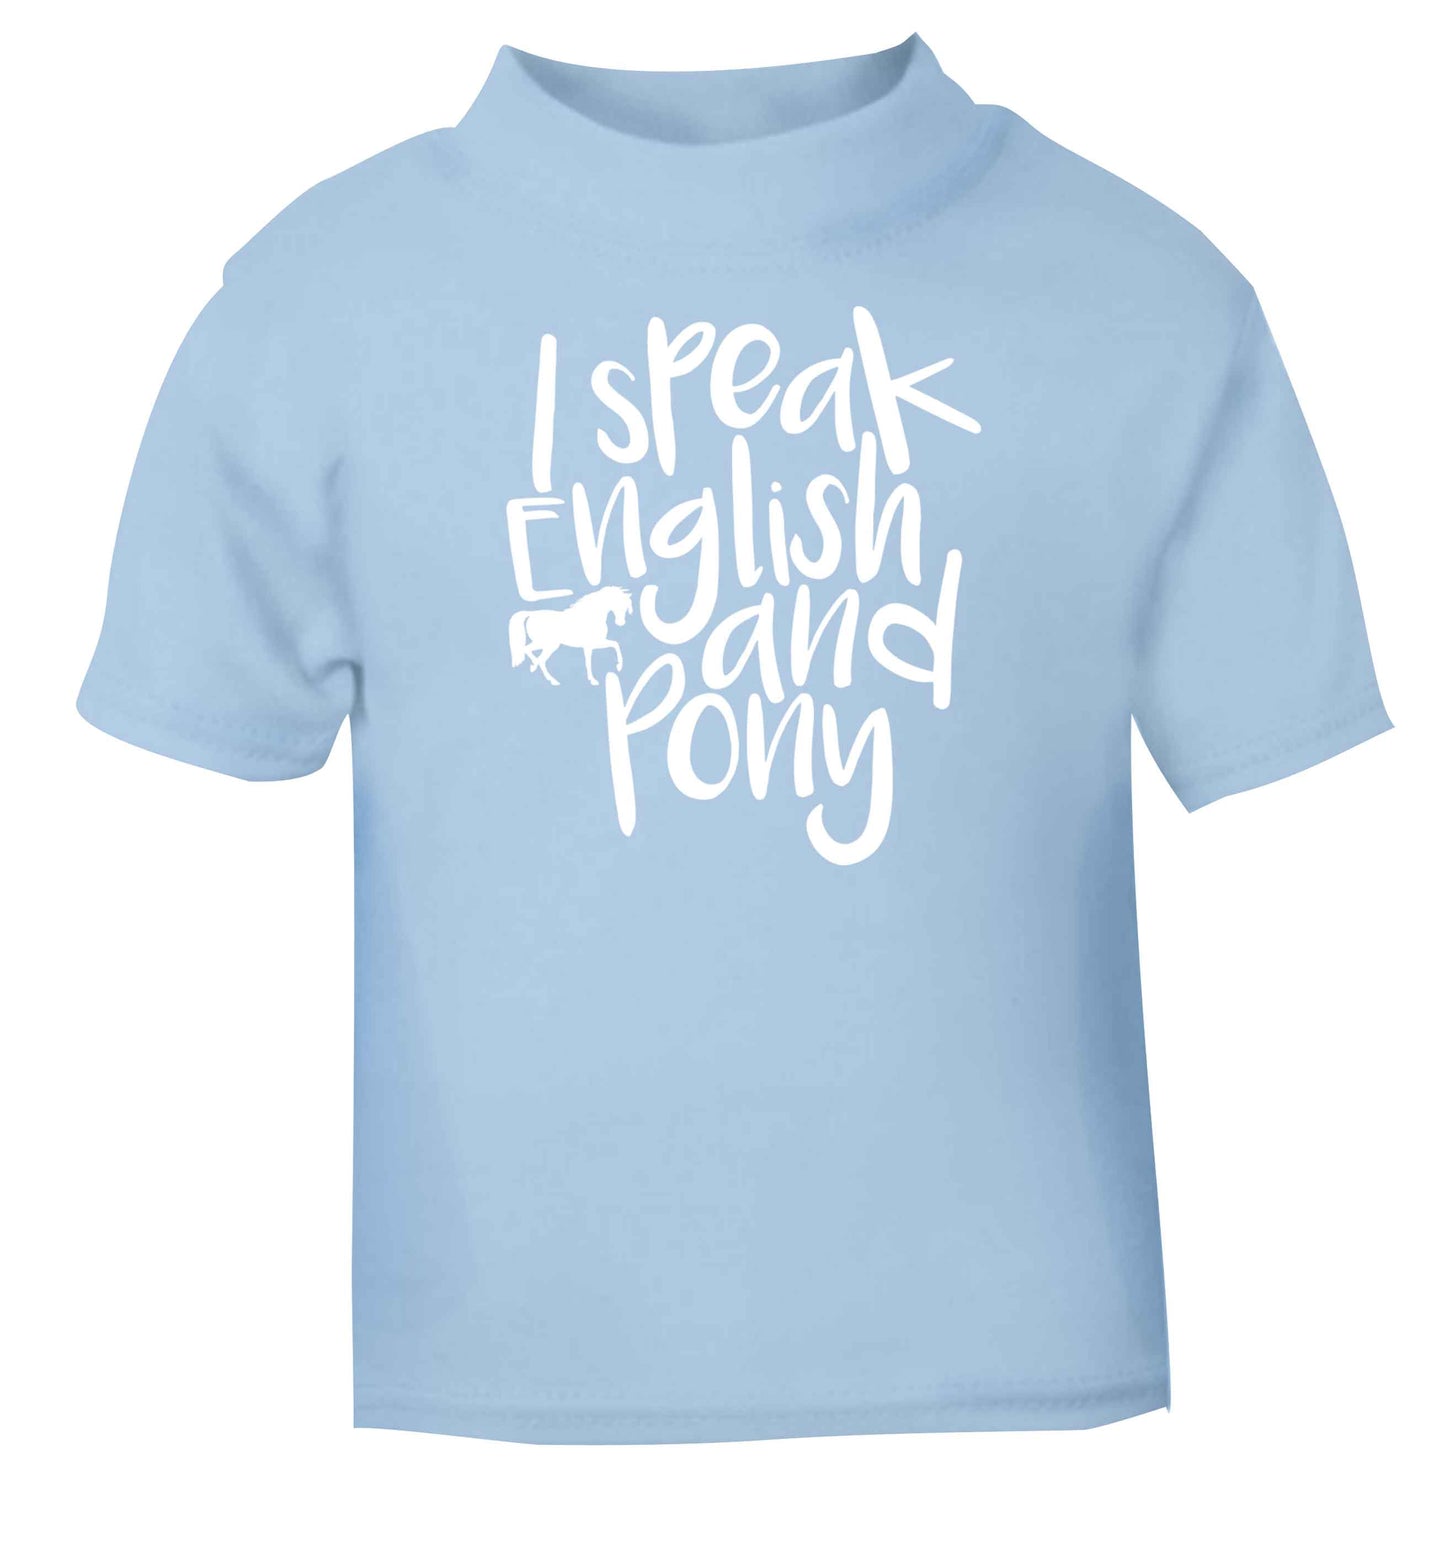 I speak English and pony light blue baby toddler Tshirt 2 Years